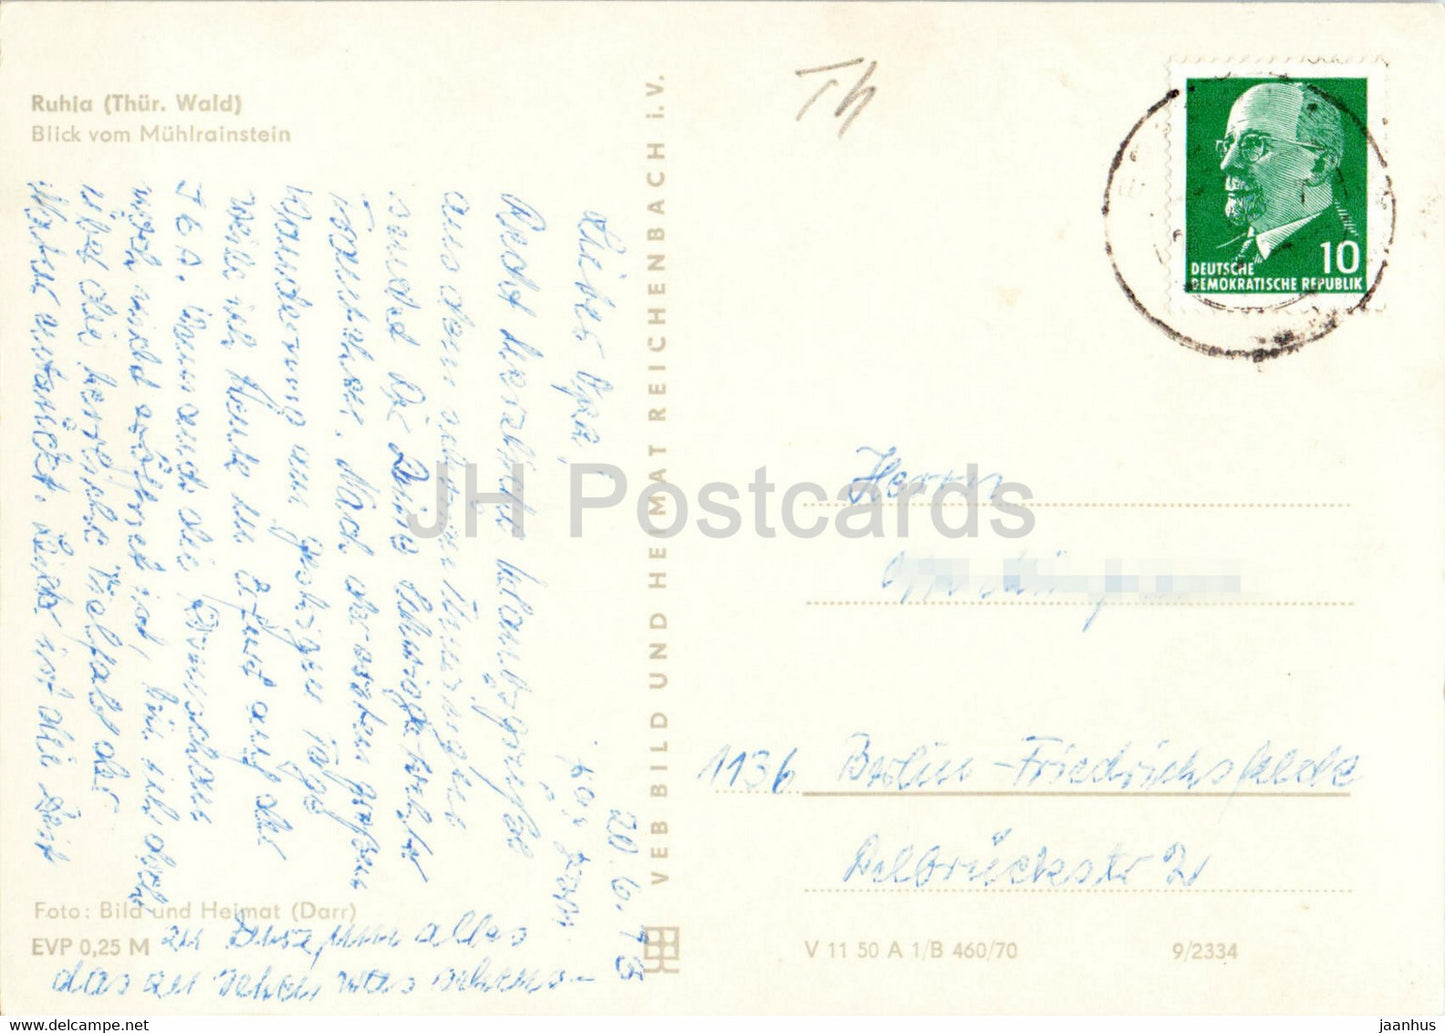 Ruhla - Blick vom Muhlrainstein - old postcard - 1973 - Germany DDR - used